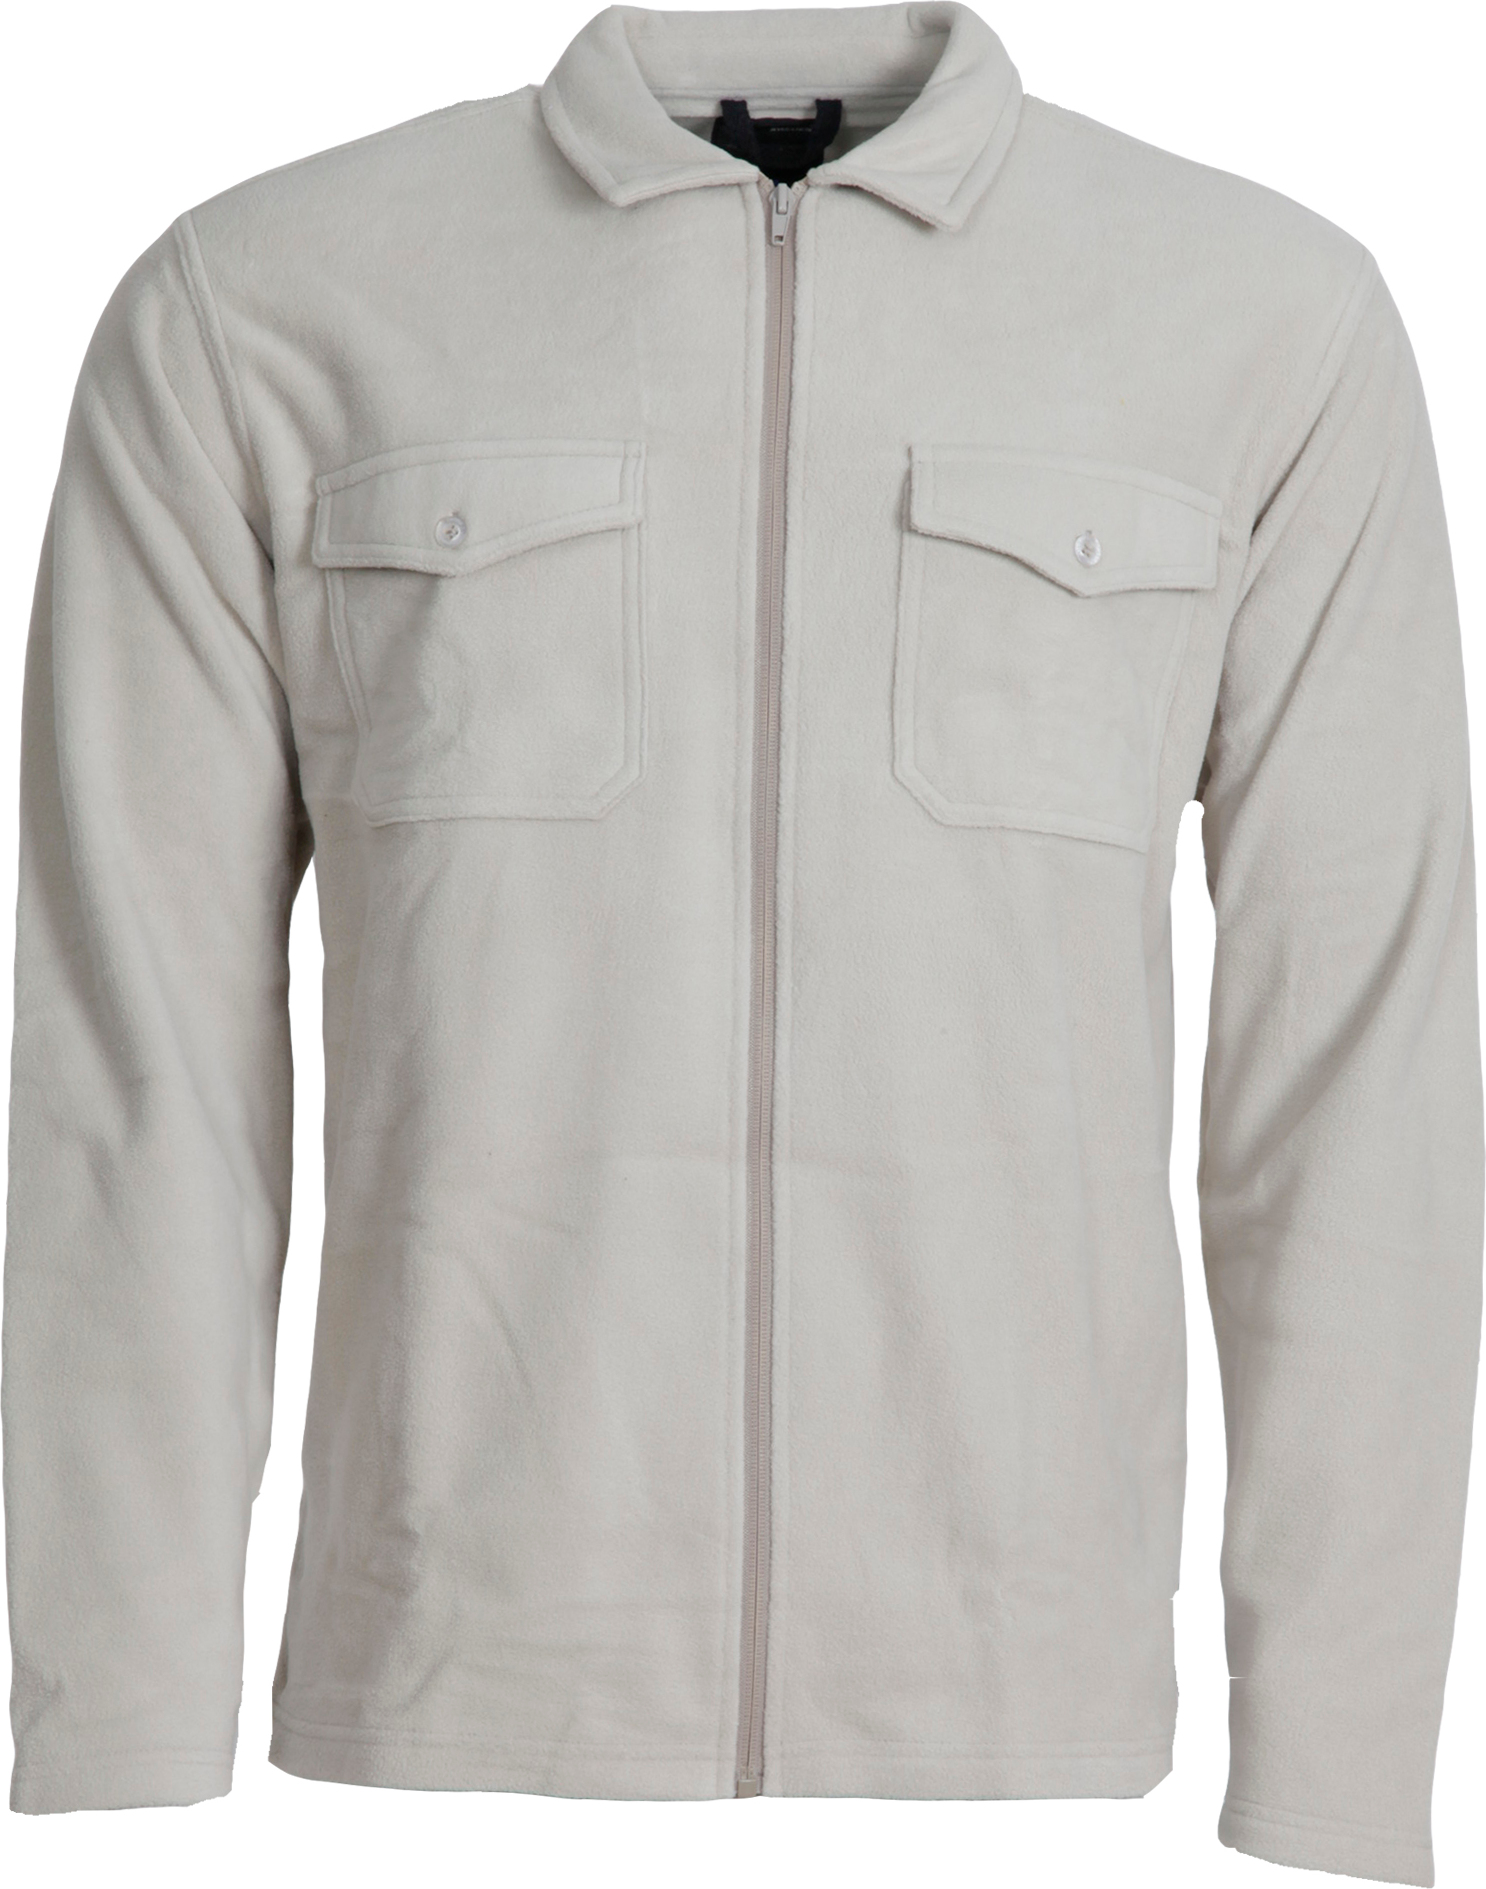 Dobsom Men’s Pescara Fleece Shirt Khaki